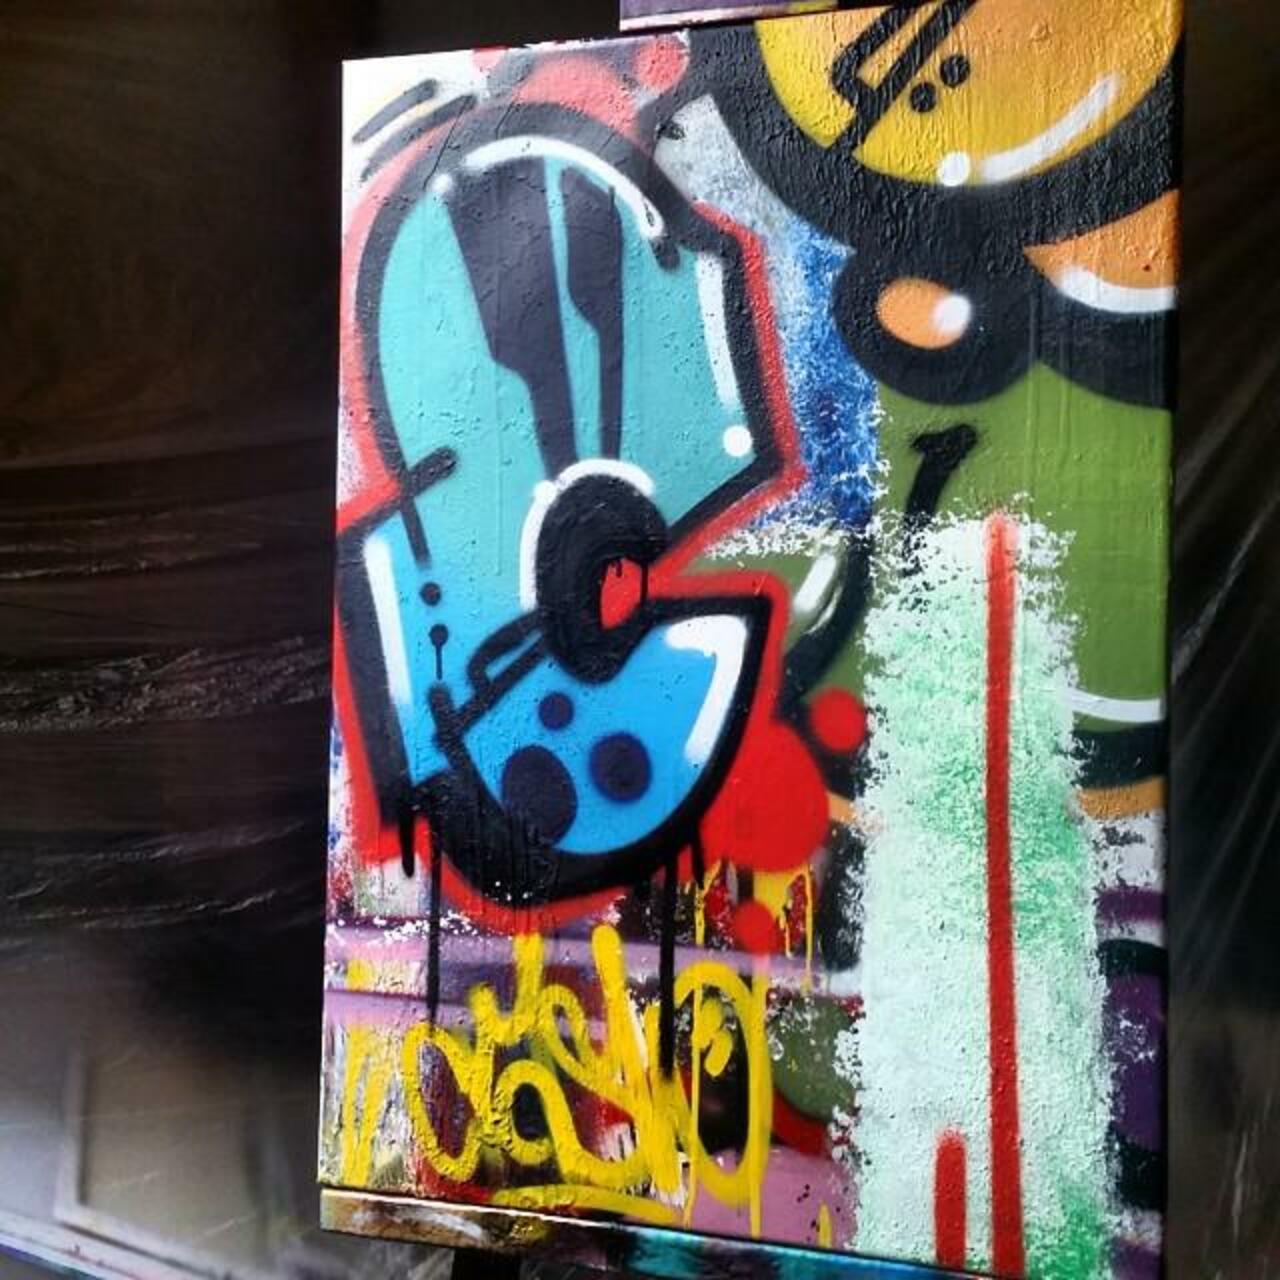 RT @artpushr: via #maxcrash "http://bit.ly/1JND8t7" #graffiti #streetart http://t.co/fqKpjkRuyj